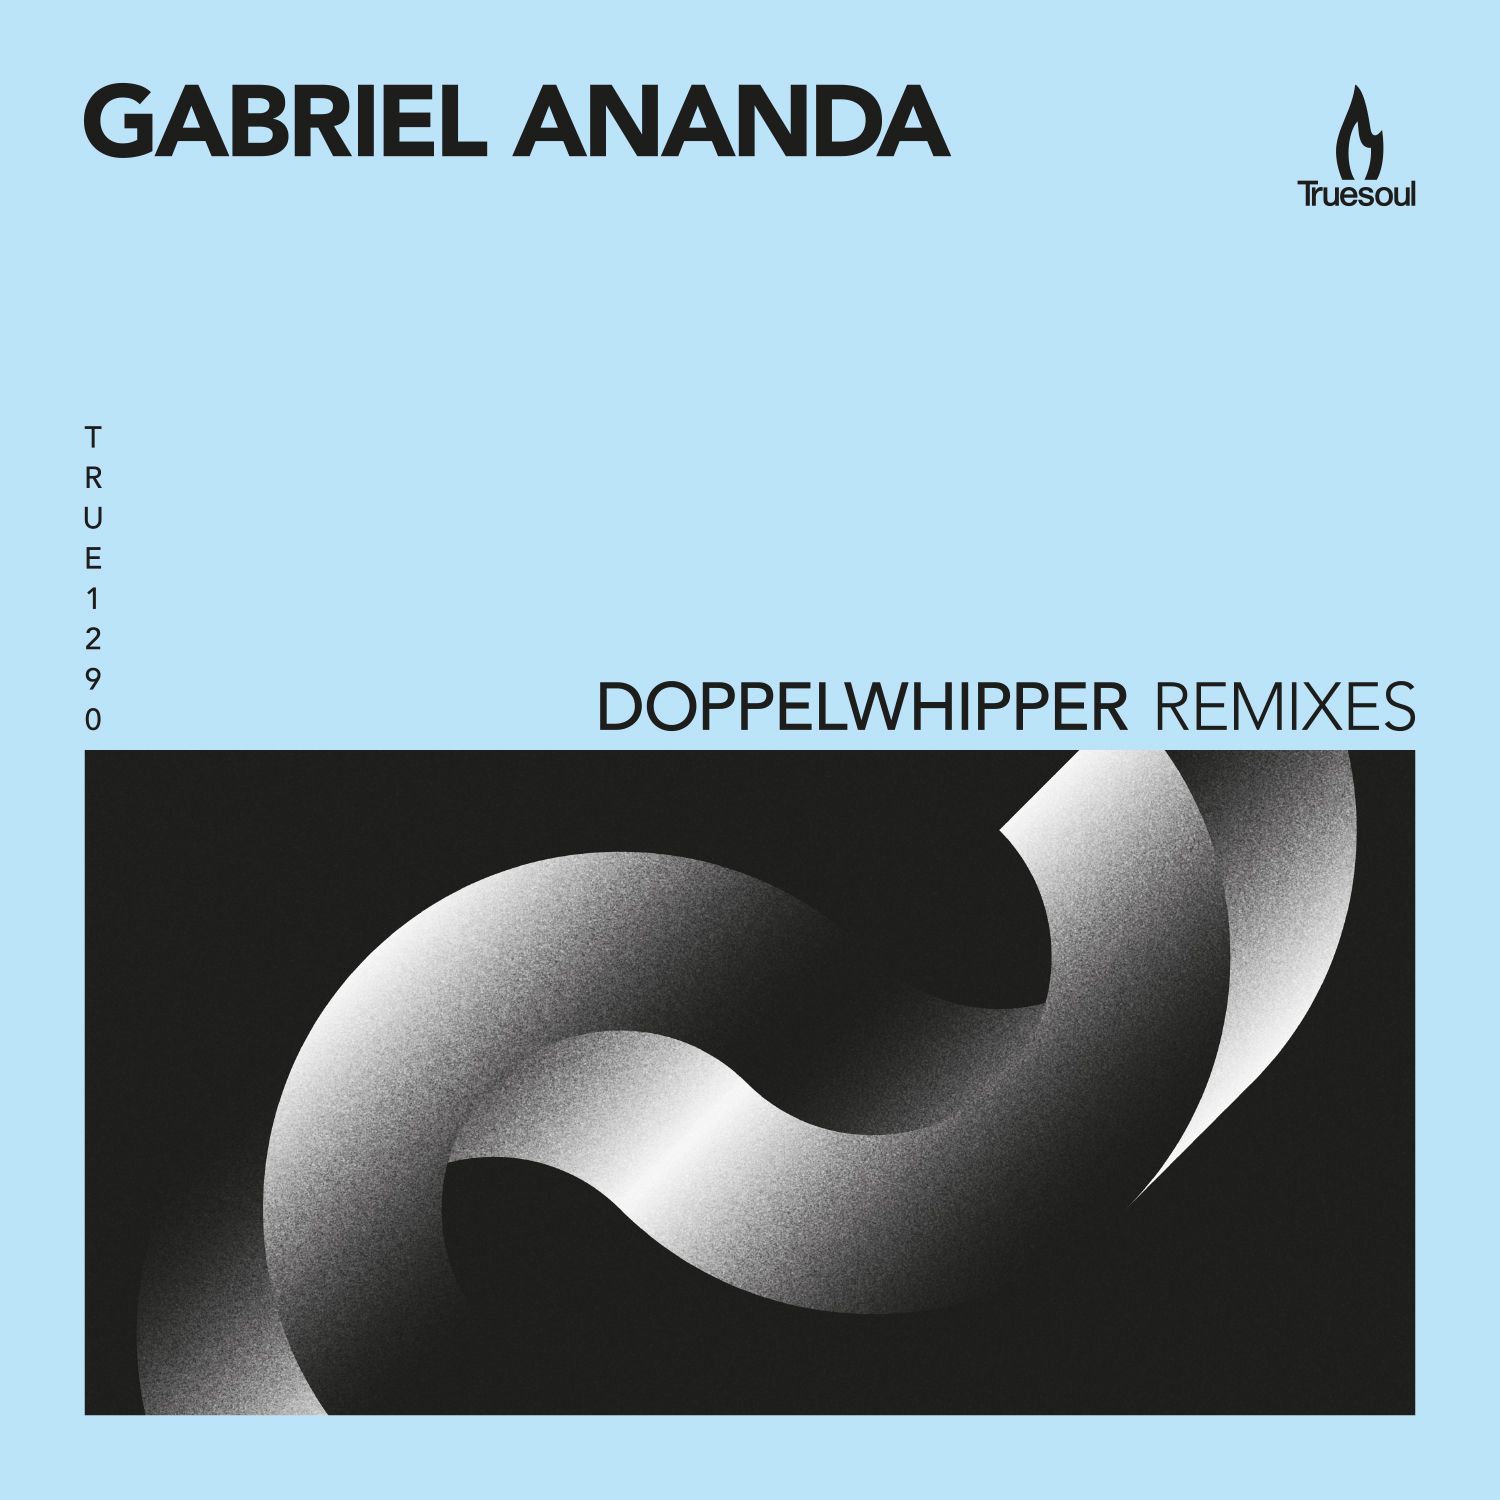 Télécharger Gabriel Ananda - Doppelwhipper (Marco Faraone Remix) - Truesoul - TRUE1290